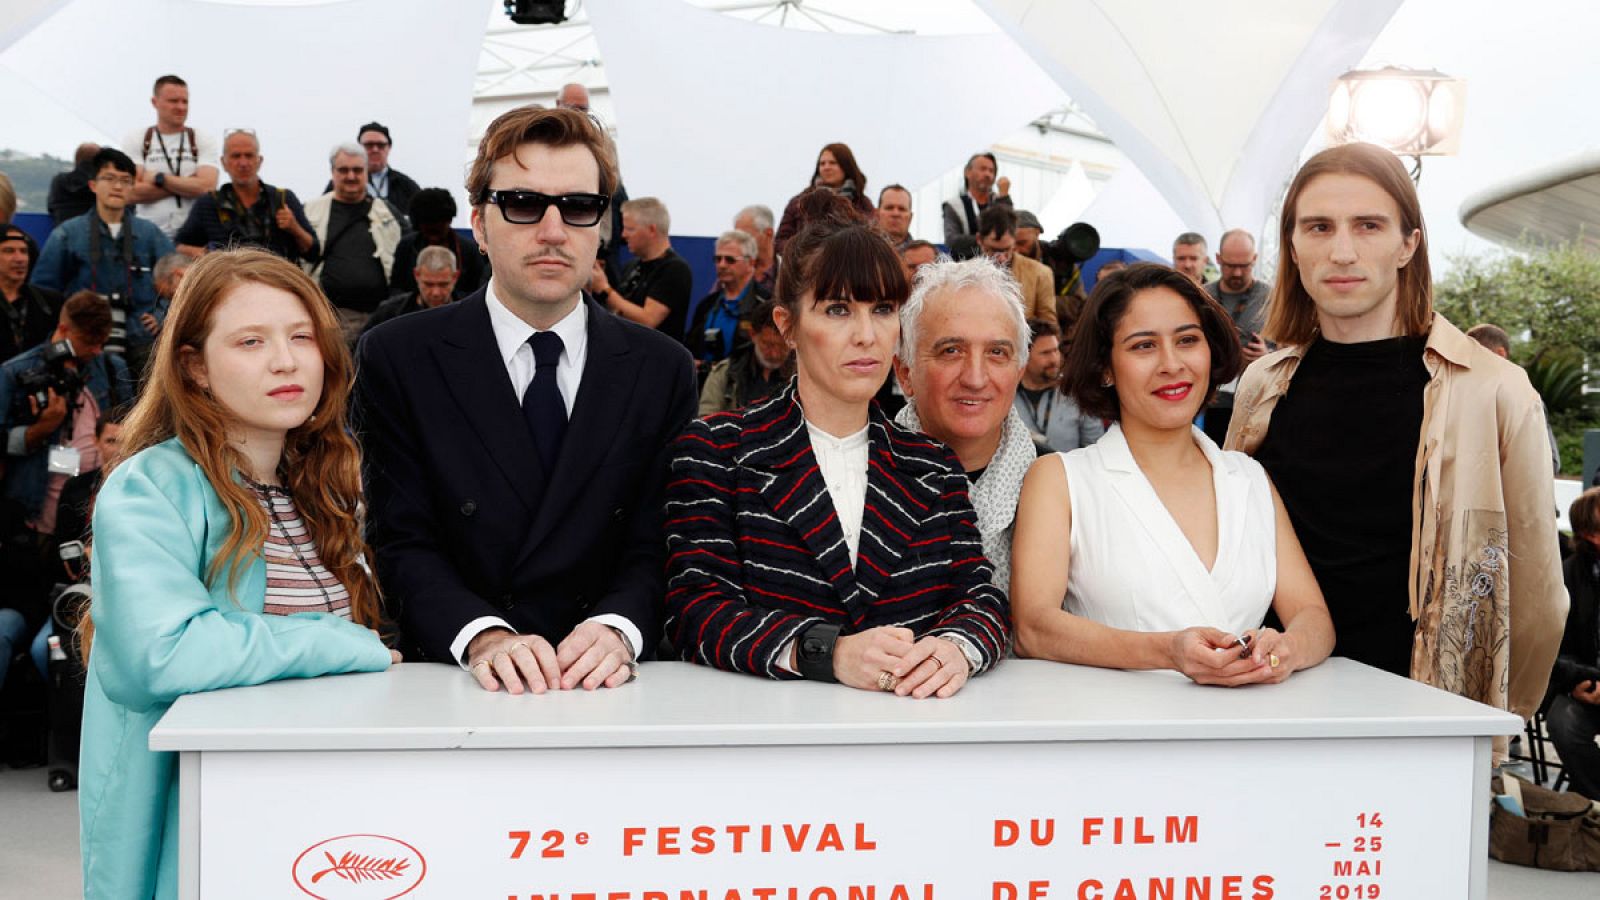 El director español Albert Serra posa junto al elenco de actores de 'Liberté' en el Festival de Cannes